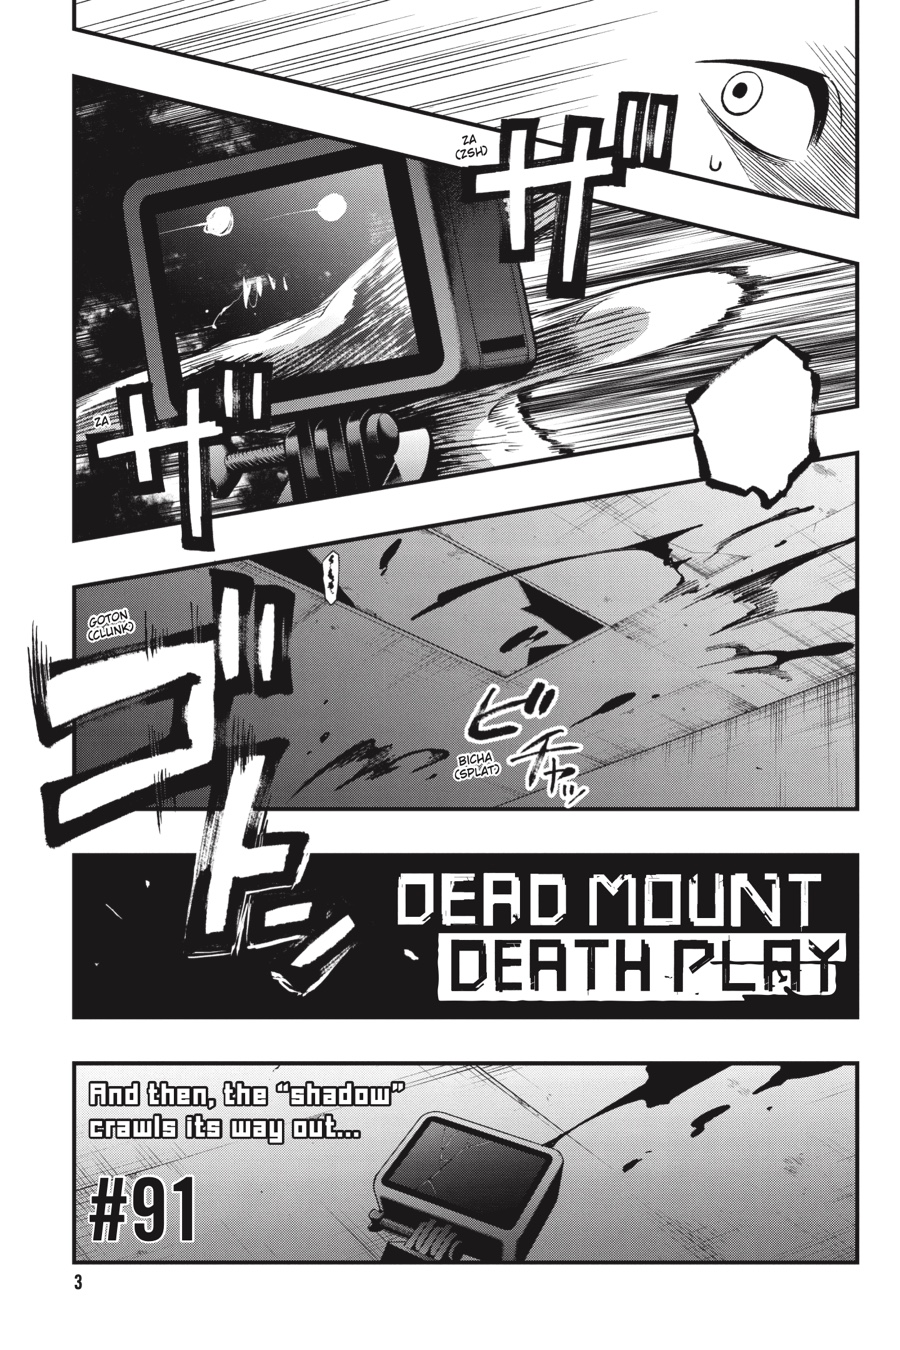 Soara Habaki, Dead Mount Death Play Wiki